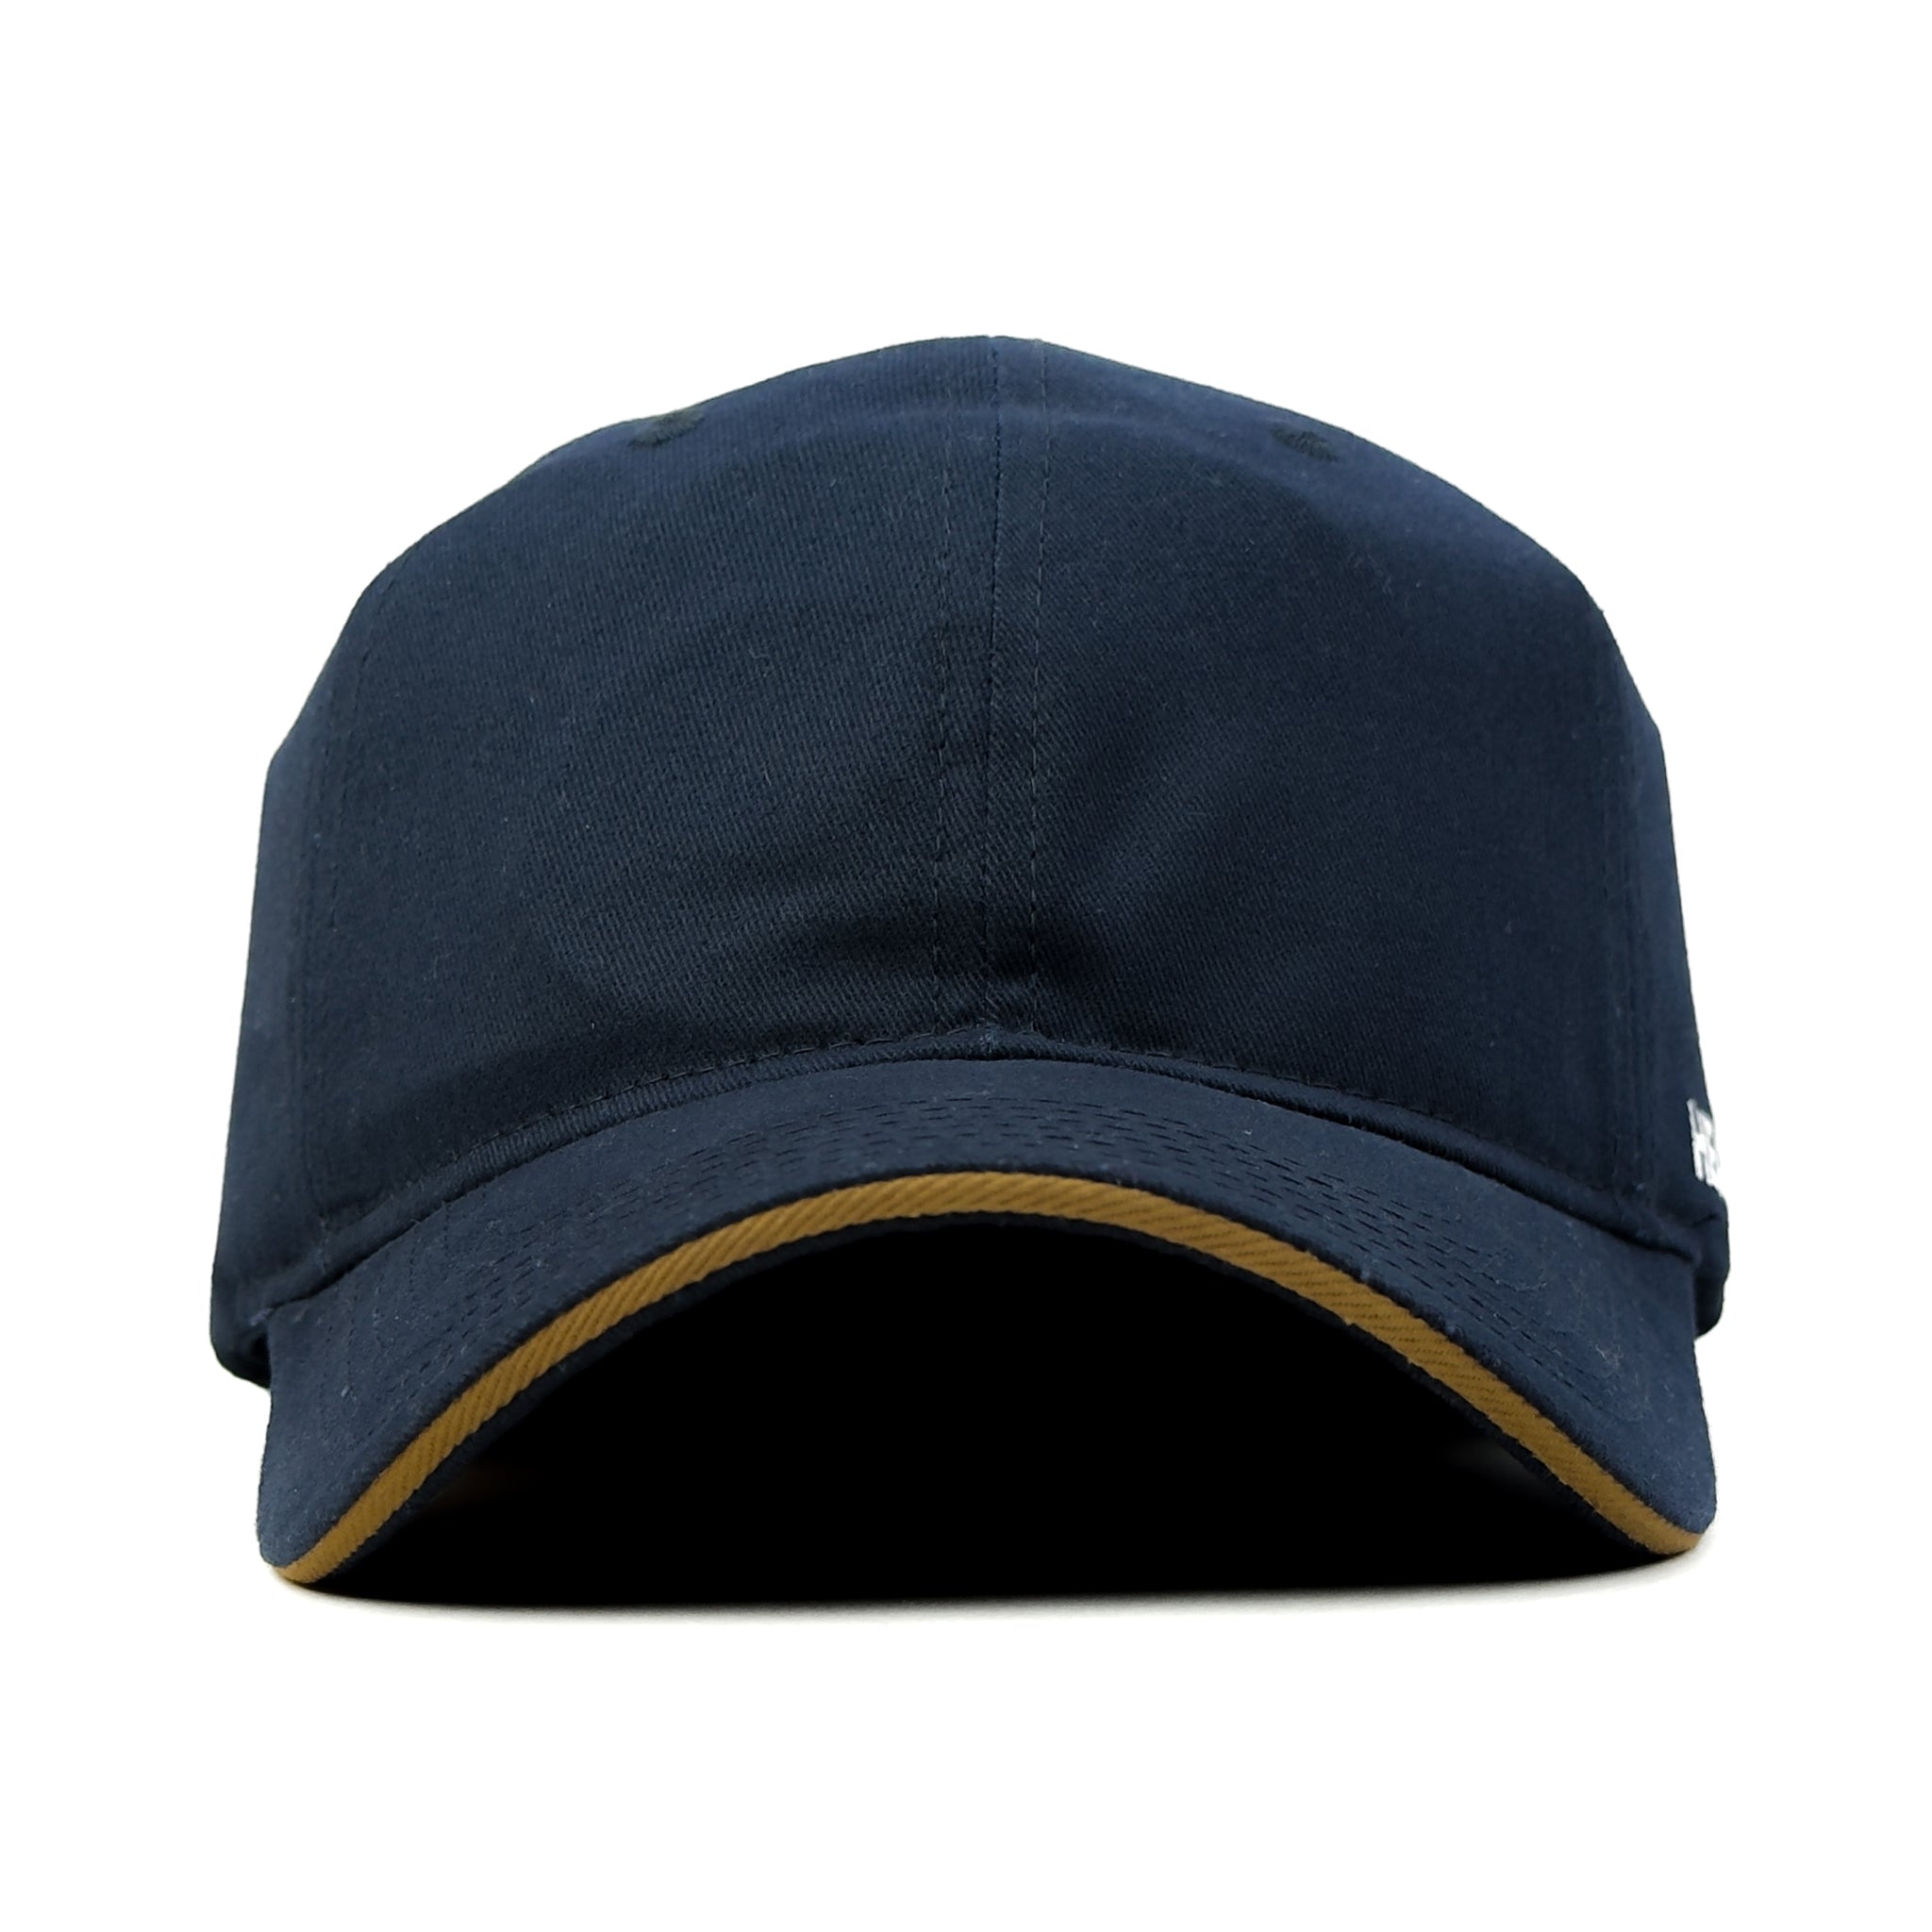 HEAD GEAR NAVY BLUE WITH BROWN SANDWICH CAP